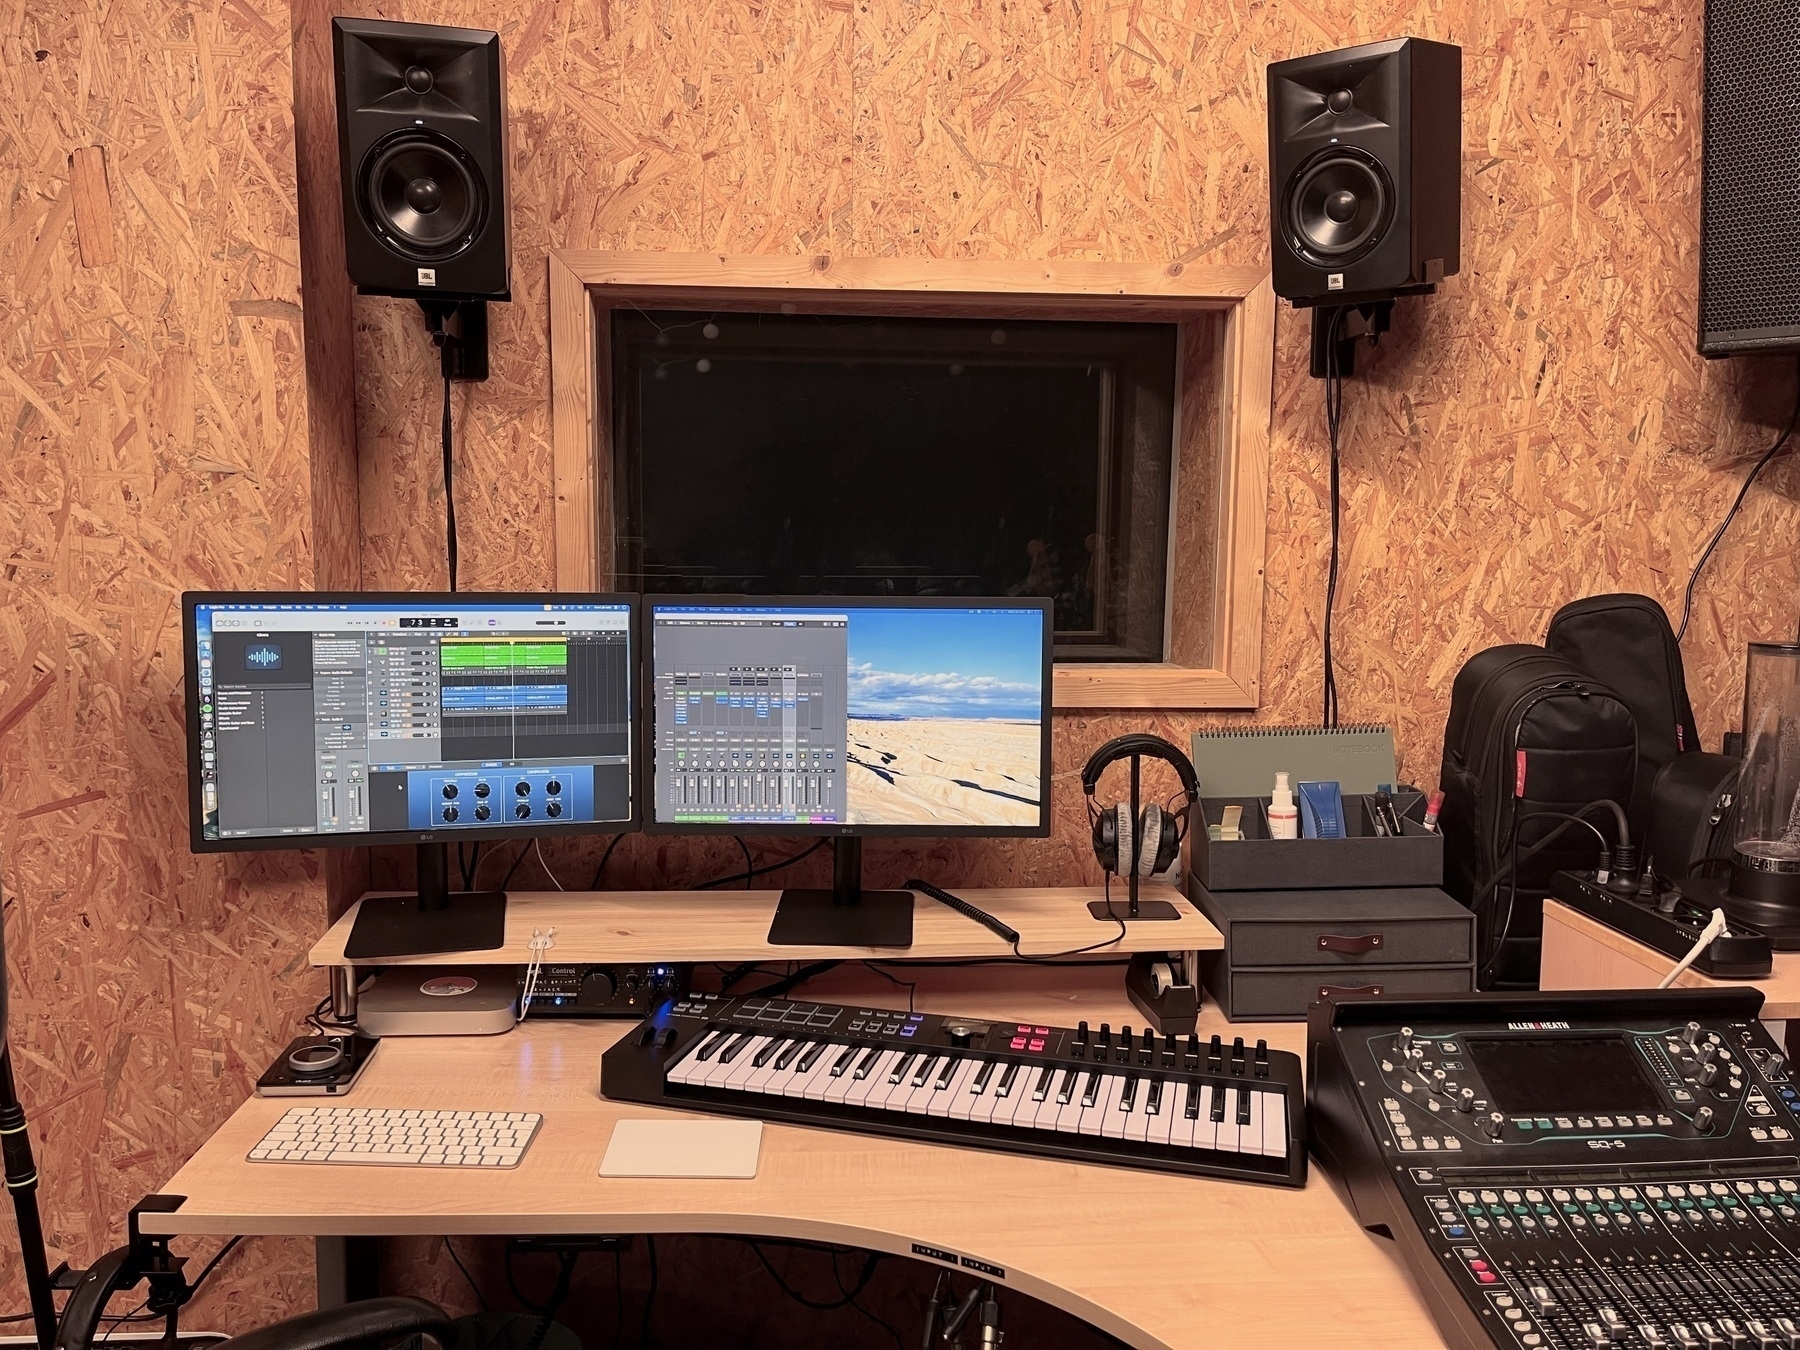 Our studio setup, with a Mac Mini, Apogee Duet 3, two LG UltraFine 24-inch screens, MIDI keyboard, studio monitors and more.